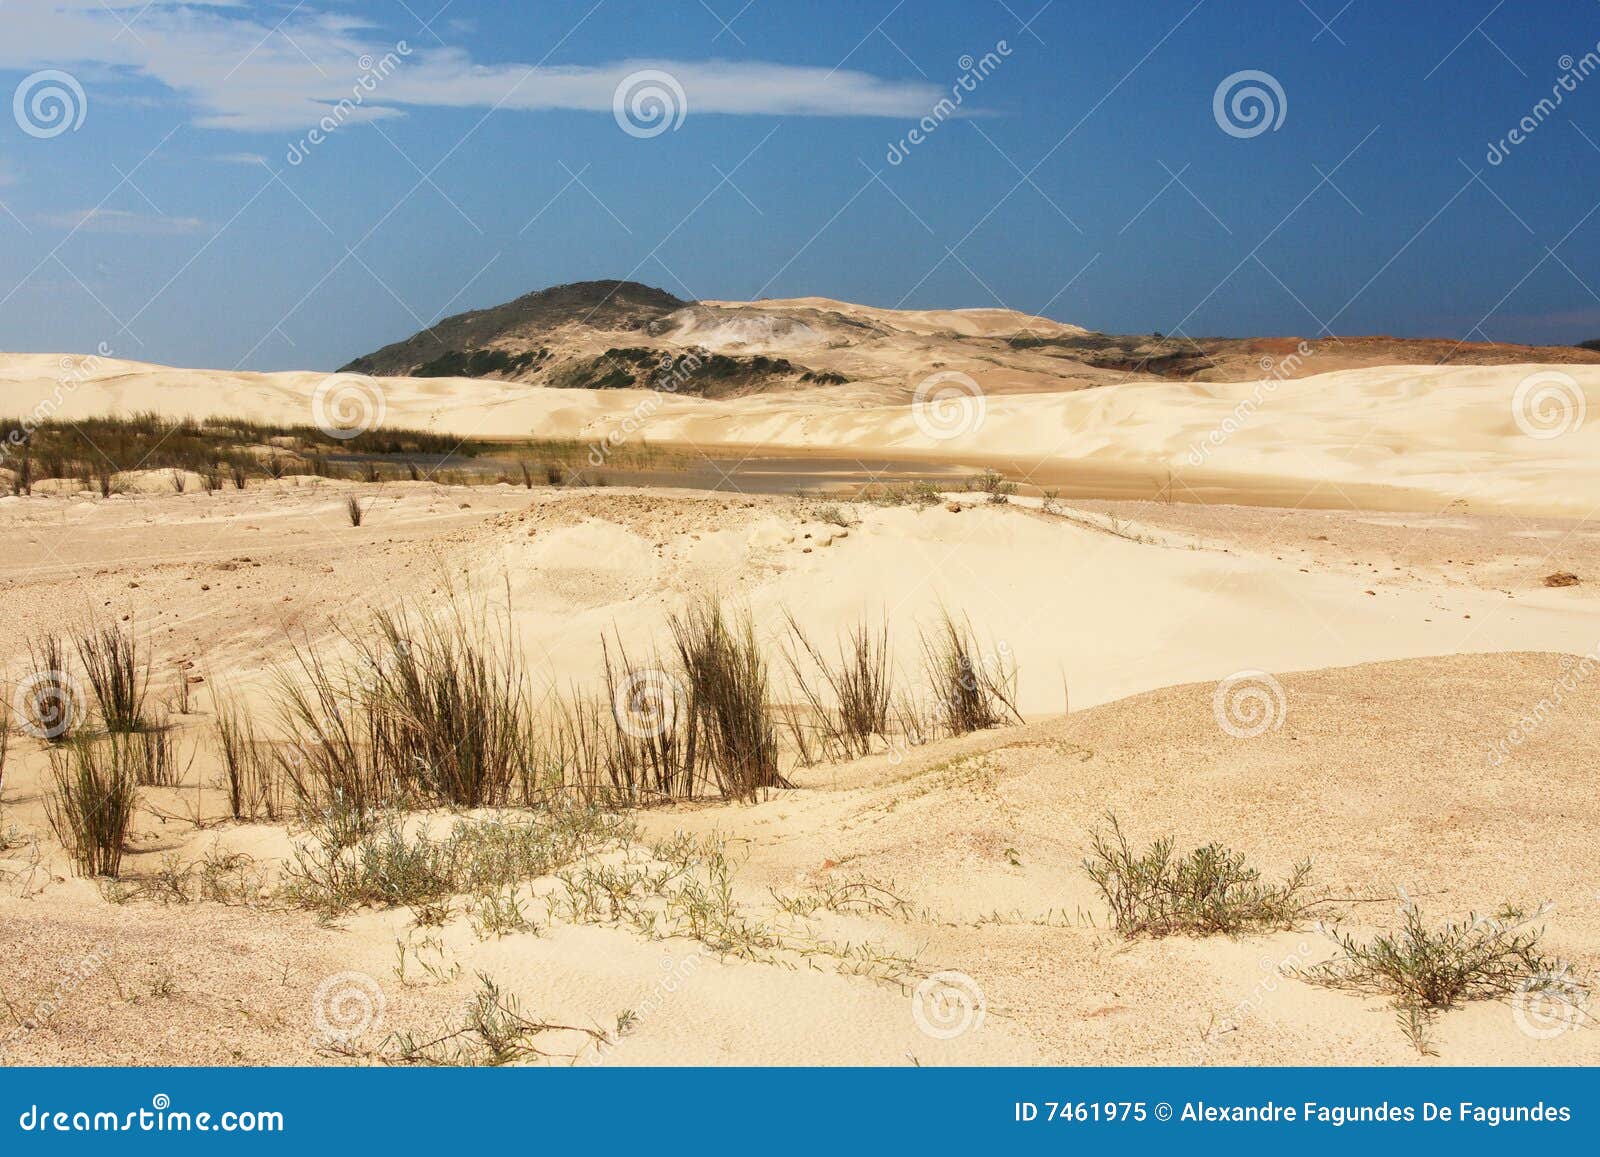 santa marta dunes santa catarina brazil